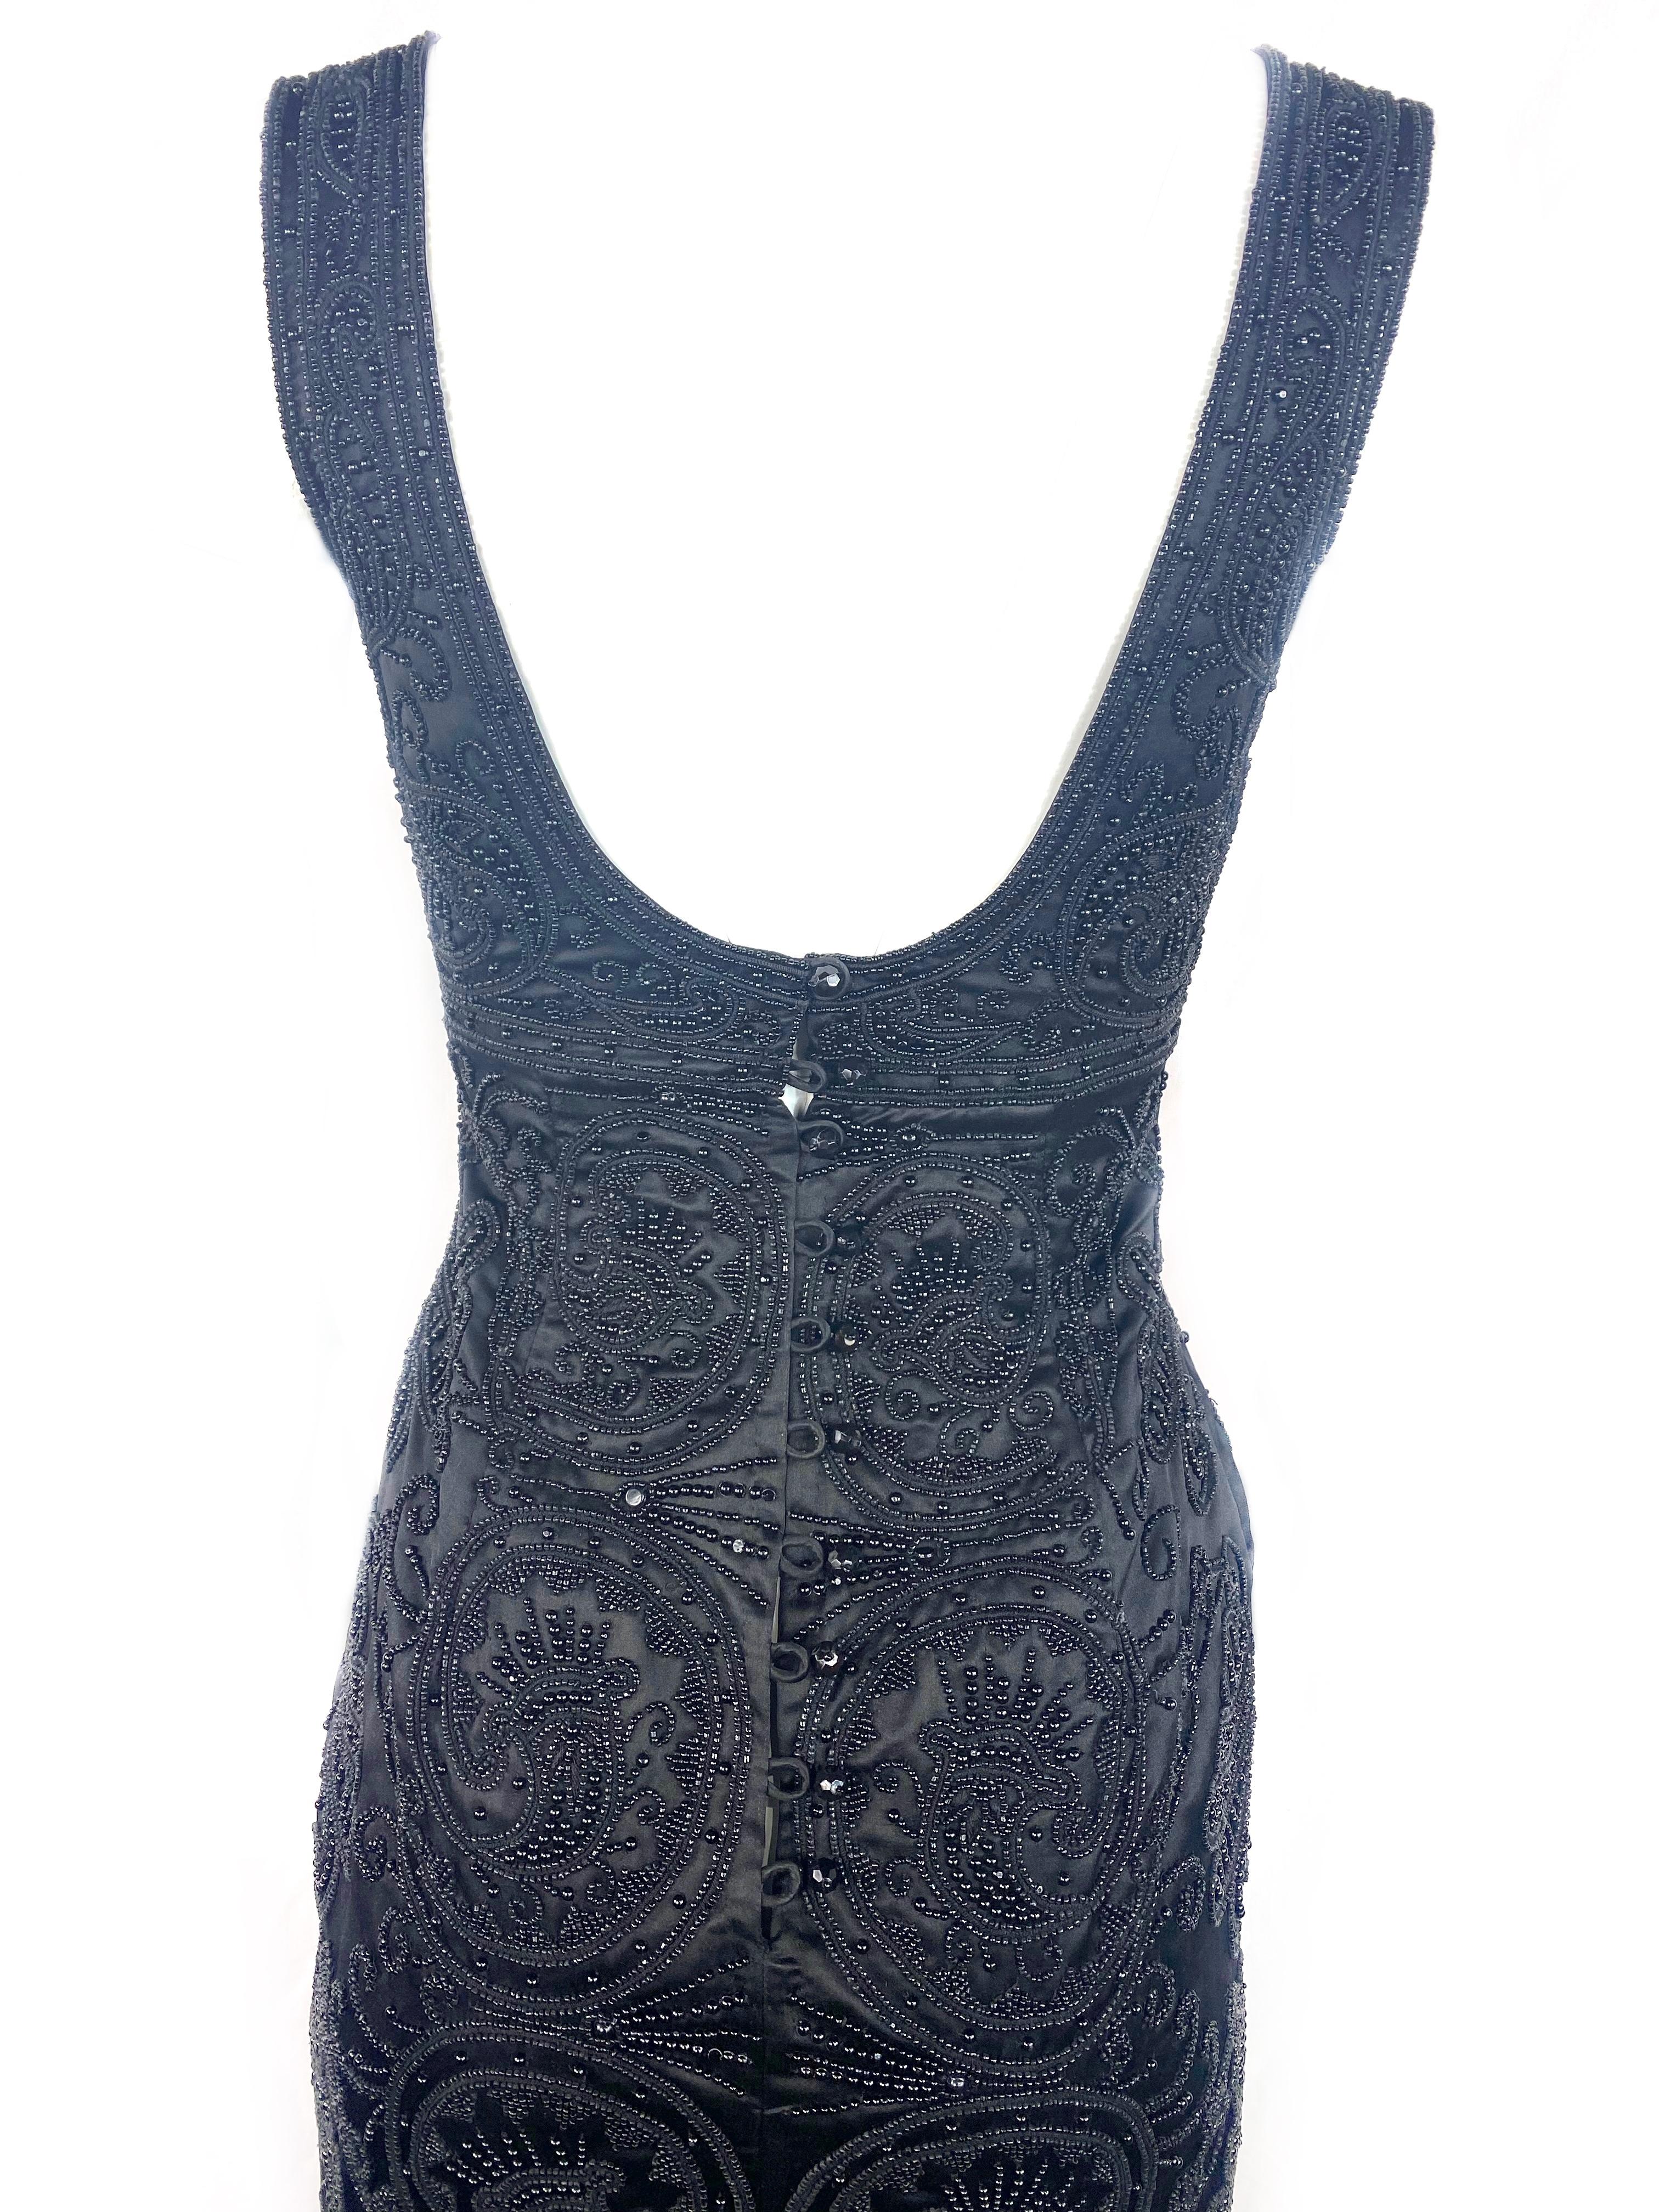 Les Habitudes Black Silk Evening Gown Dress, Size Small For Sale 1